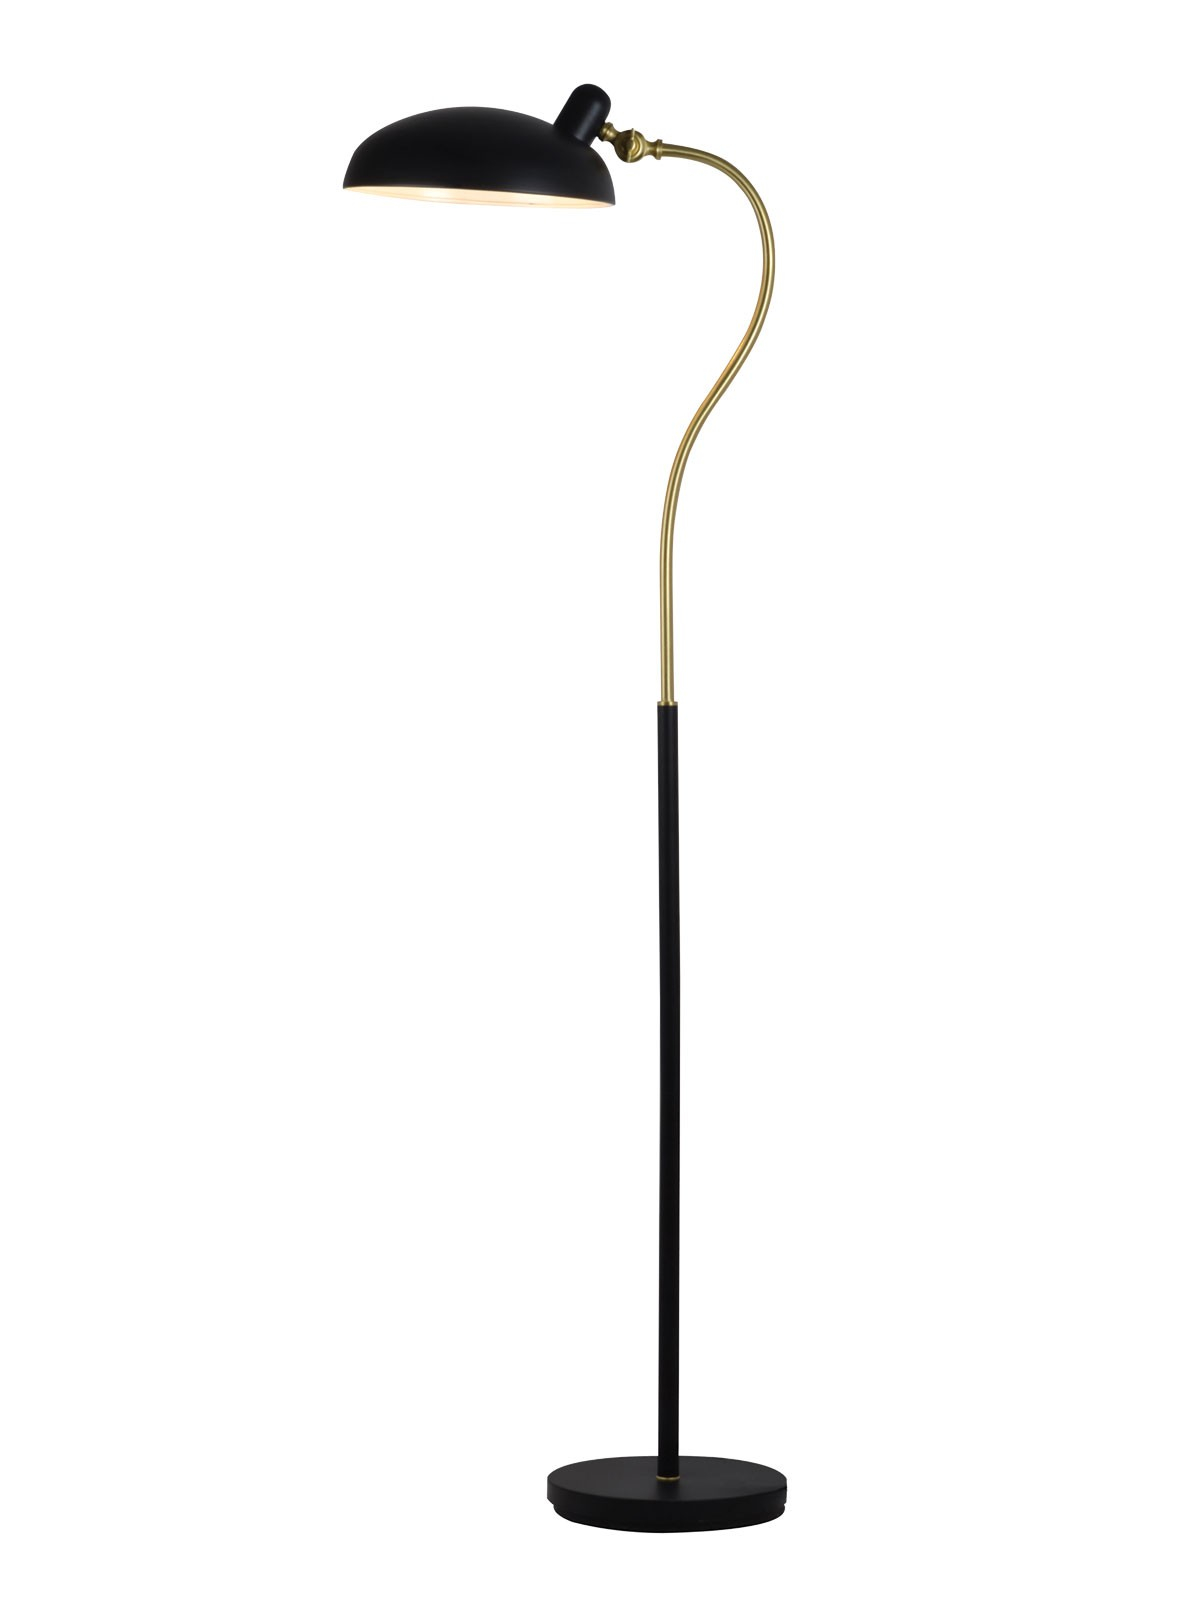 Yorke 1 Light Floor Lamp In Blackbrass throughout sizing 1200 X 1600